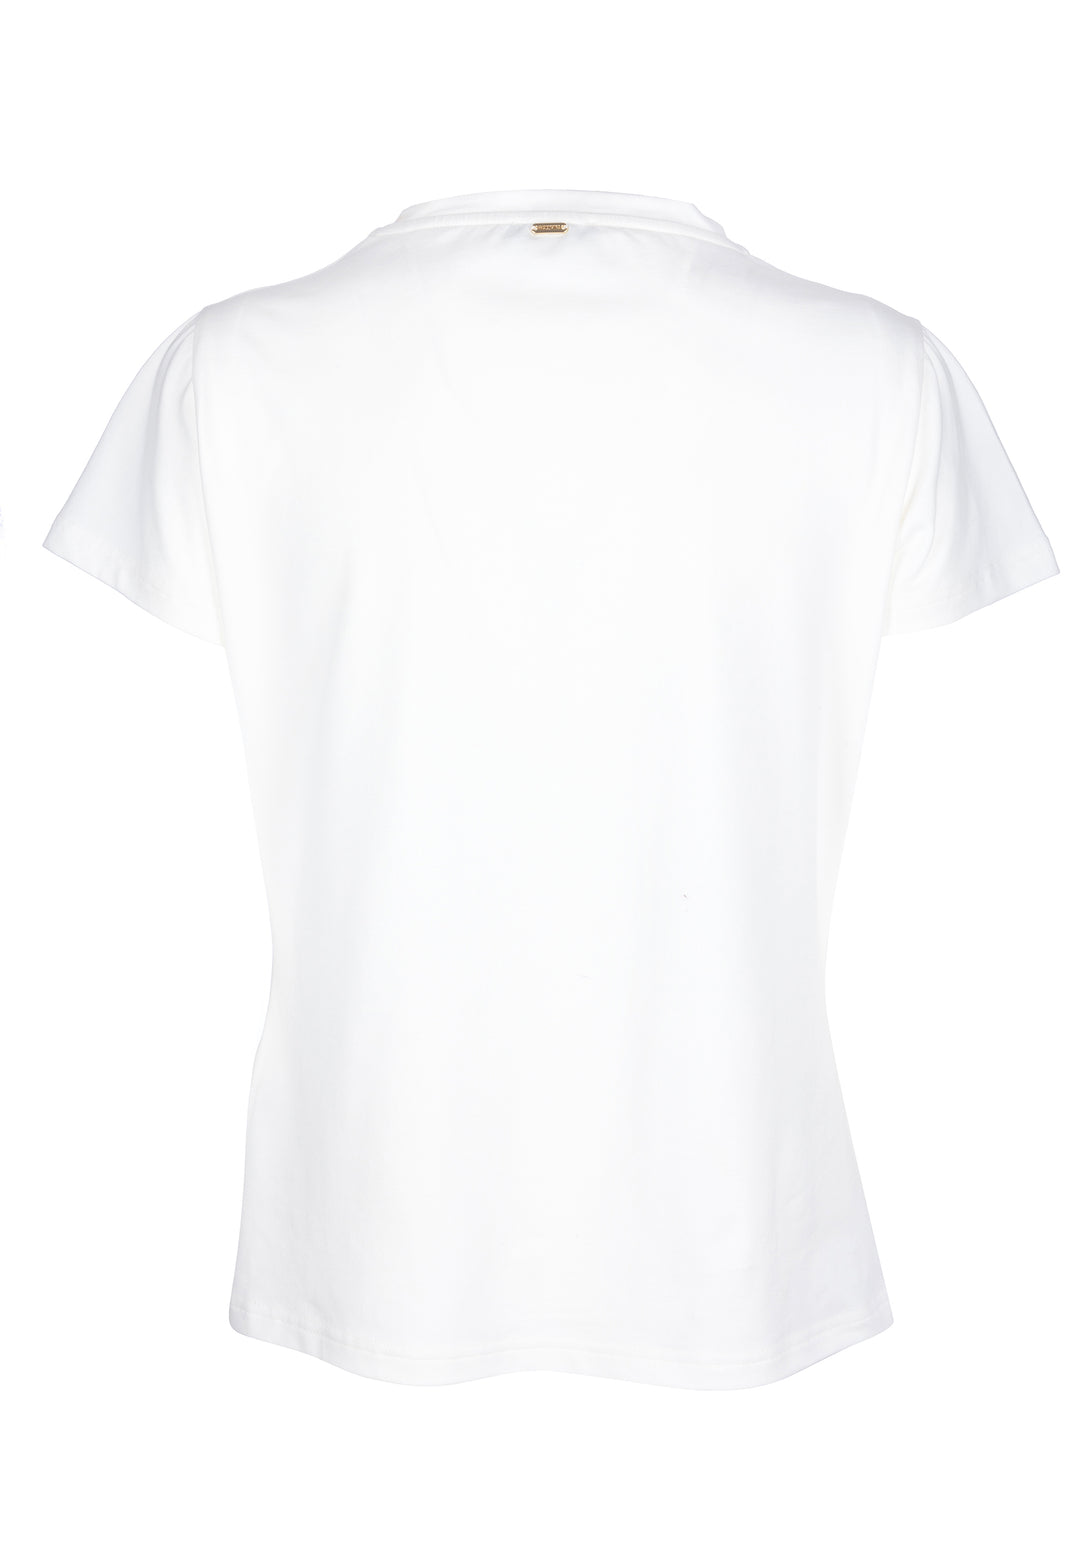 T-shirt regular fit made in cotton jersey